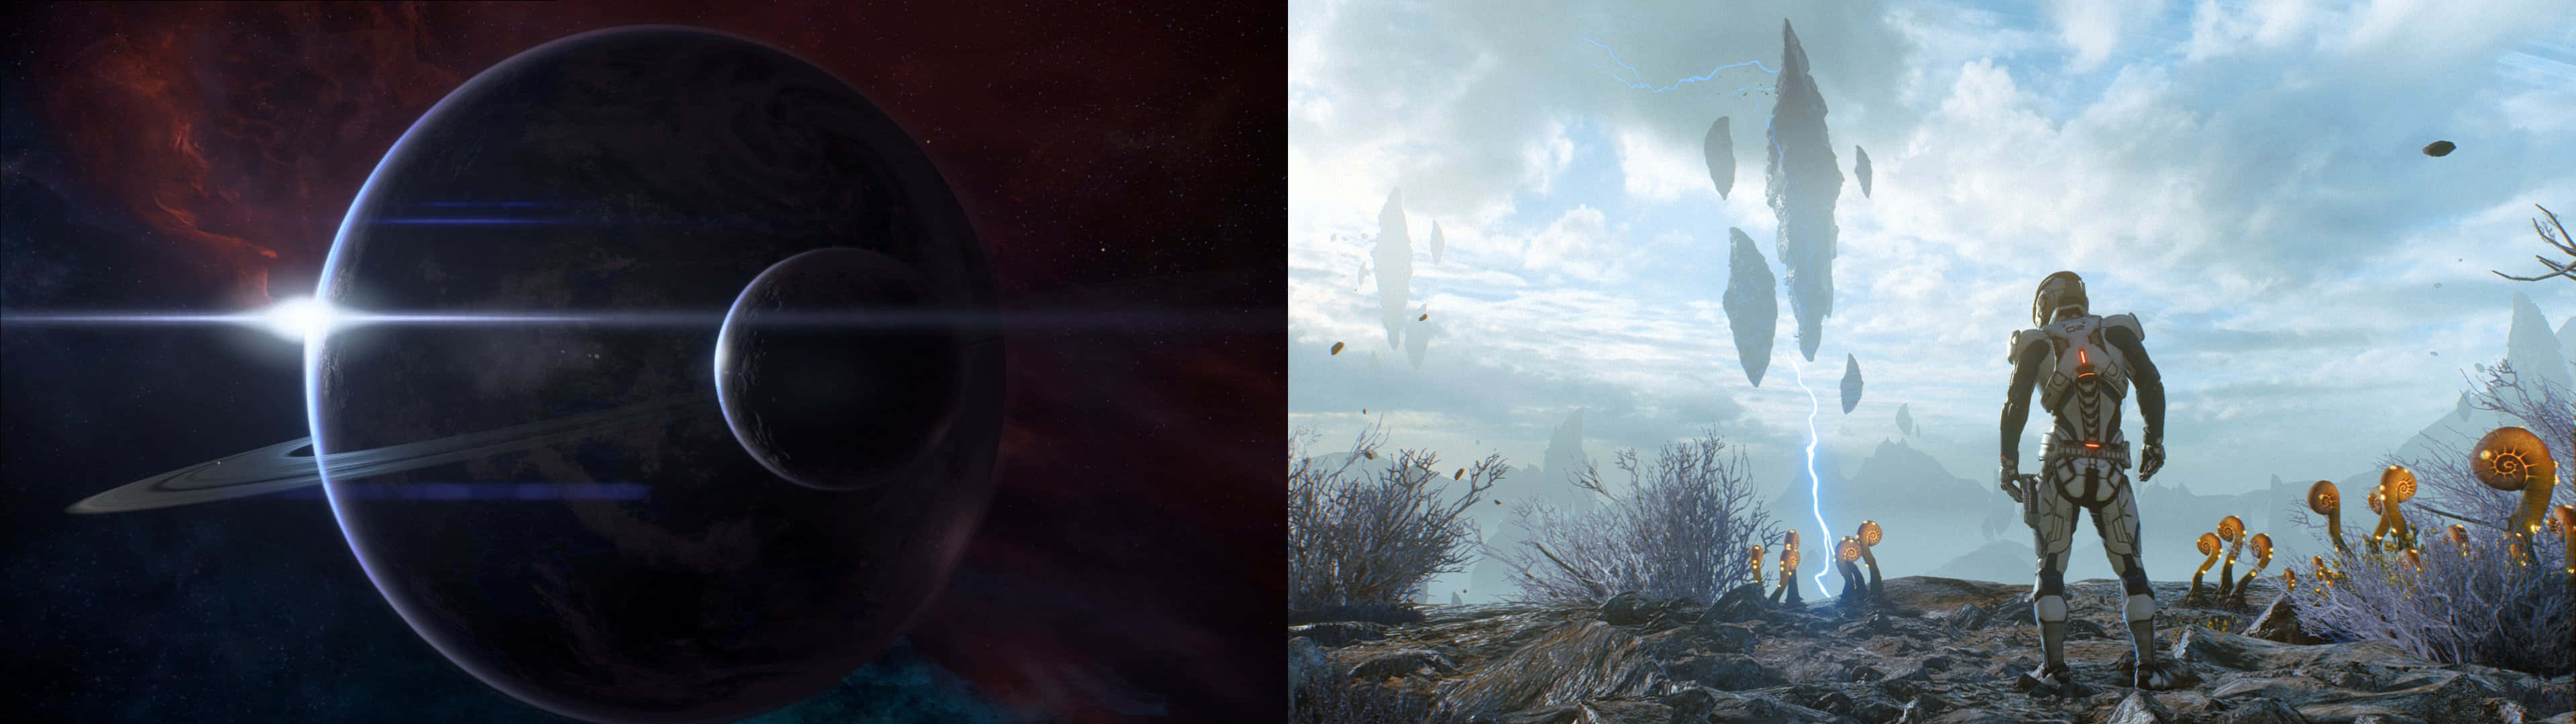 Spectacular Mass Effect Andromeda Galaxy View Wallpaper